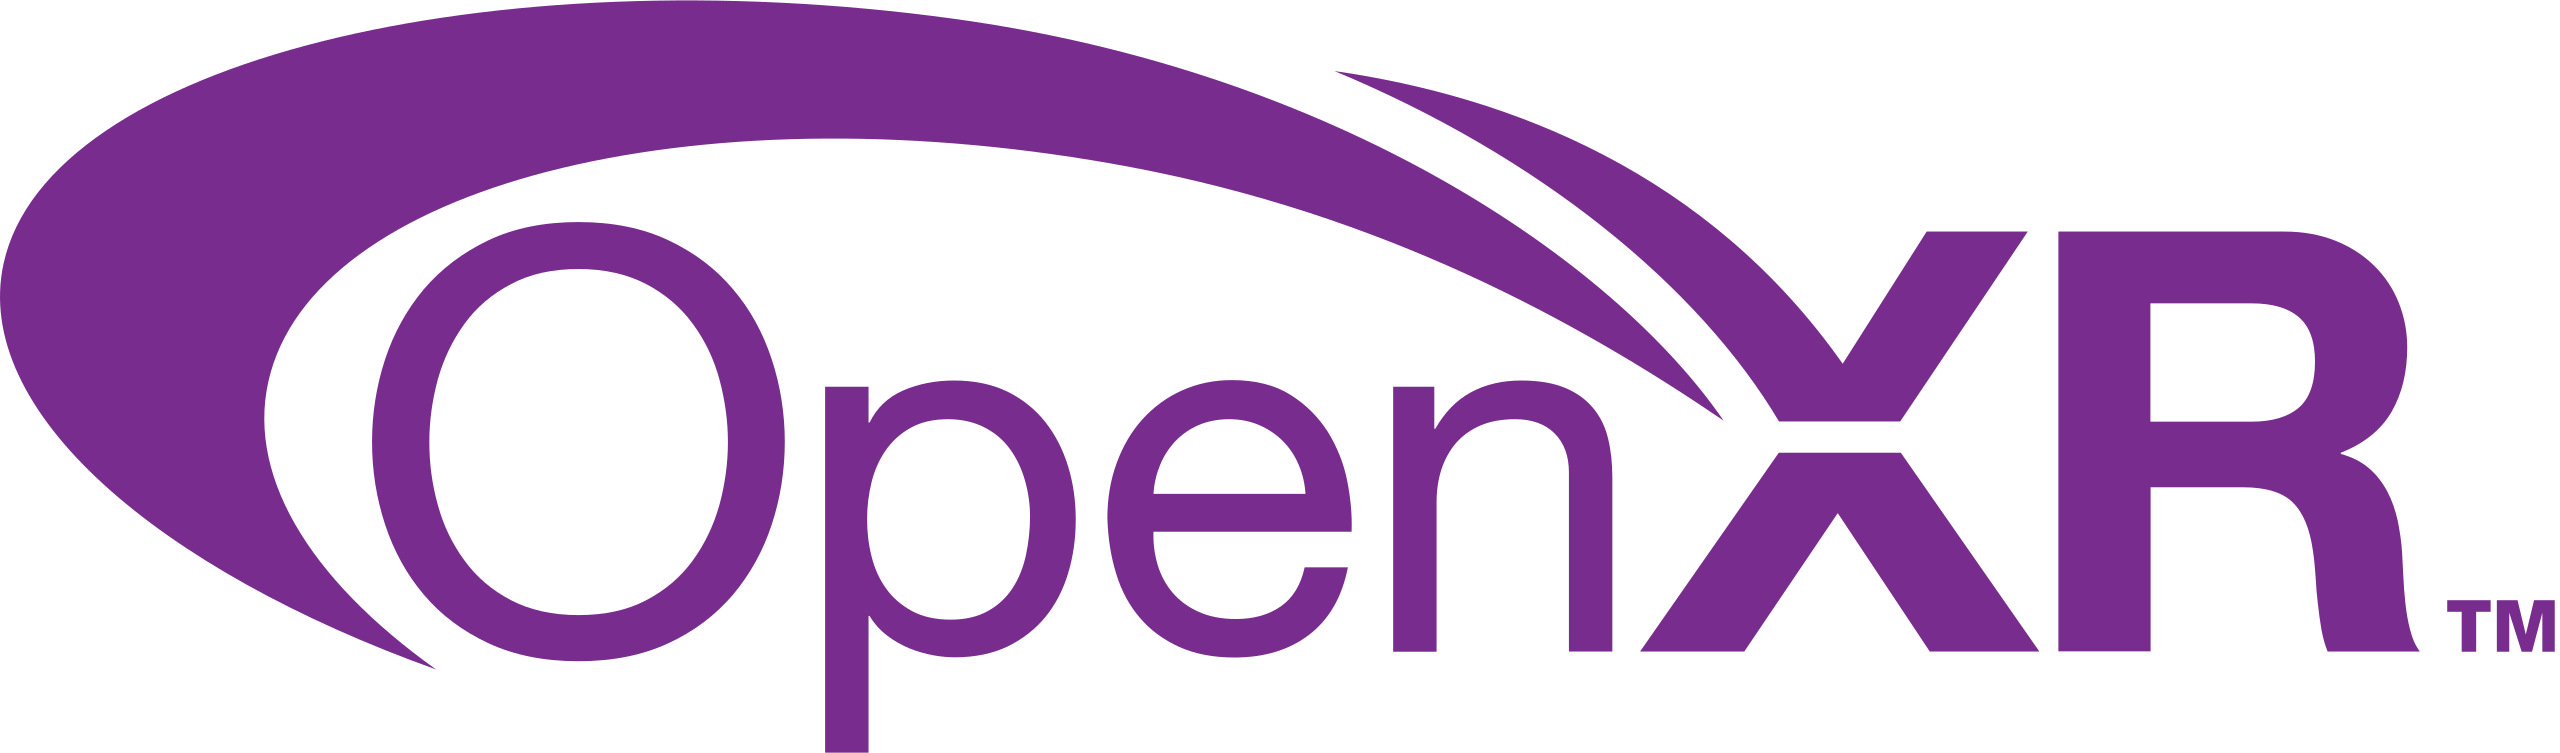 OpenXR logo